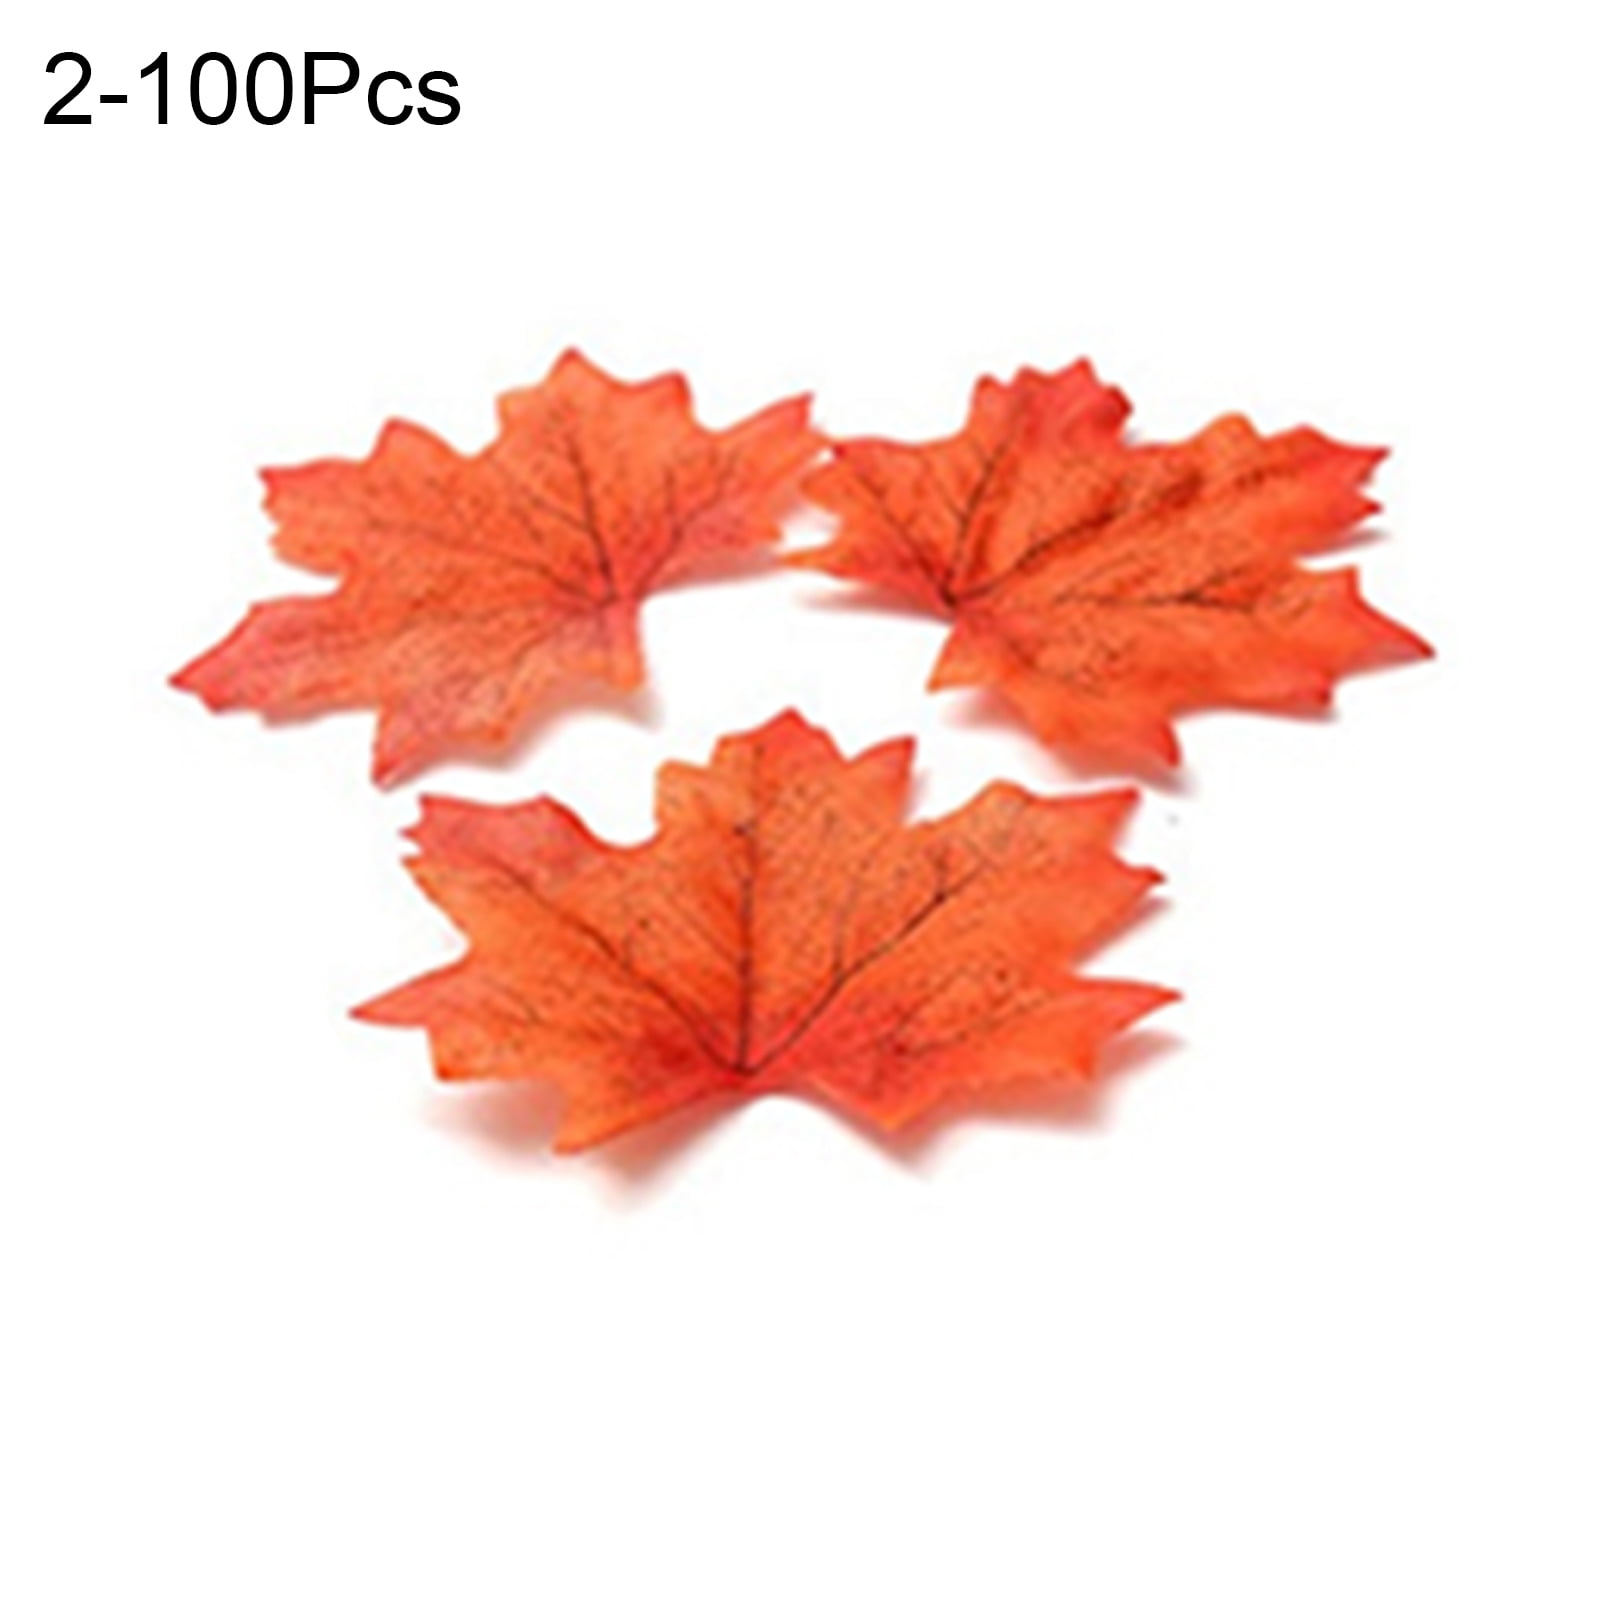 Details about   100Pcs Artificial Maple Fall Leaves Autumn Leaf Wedding Table Favor Decoration 